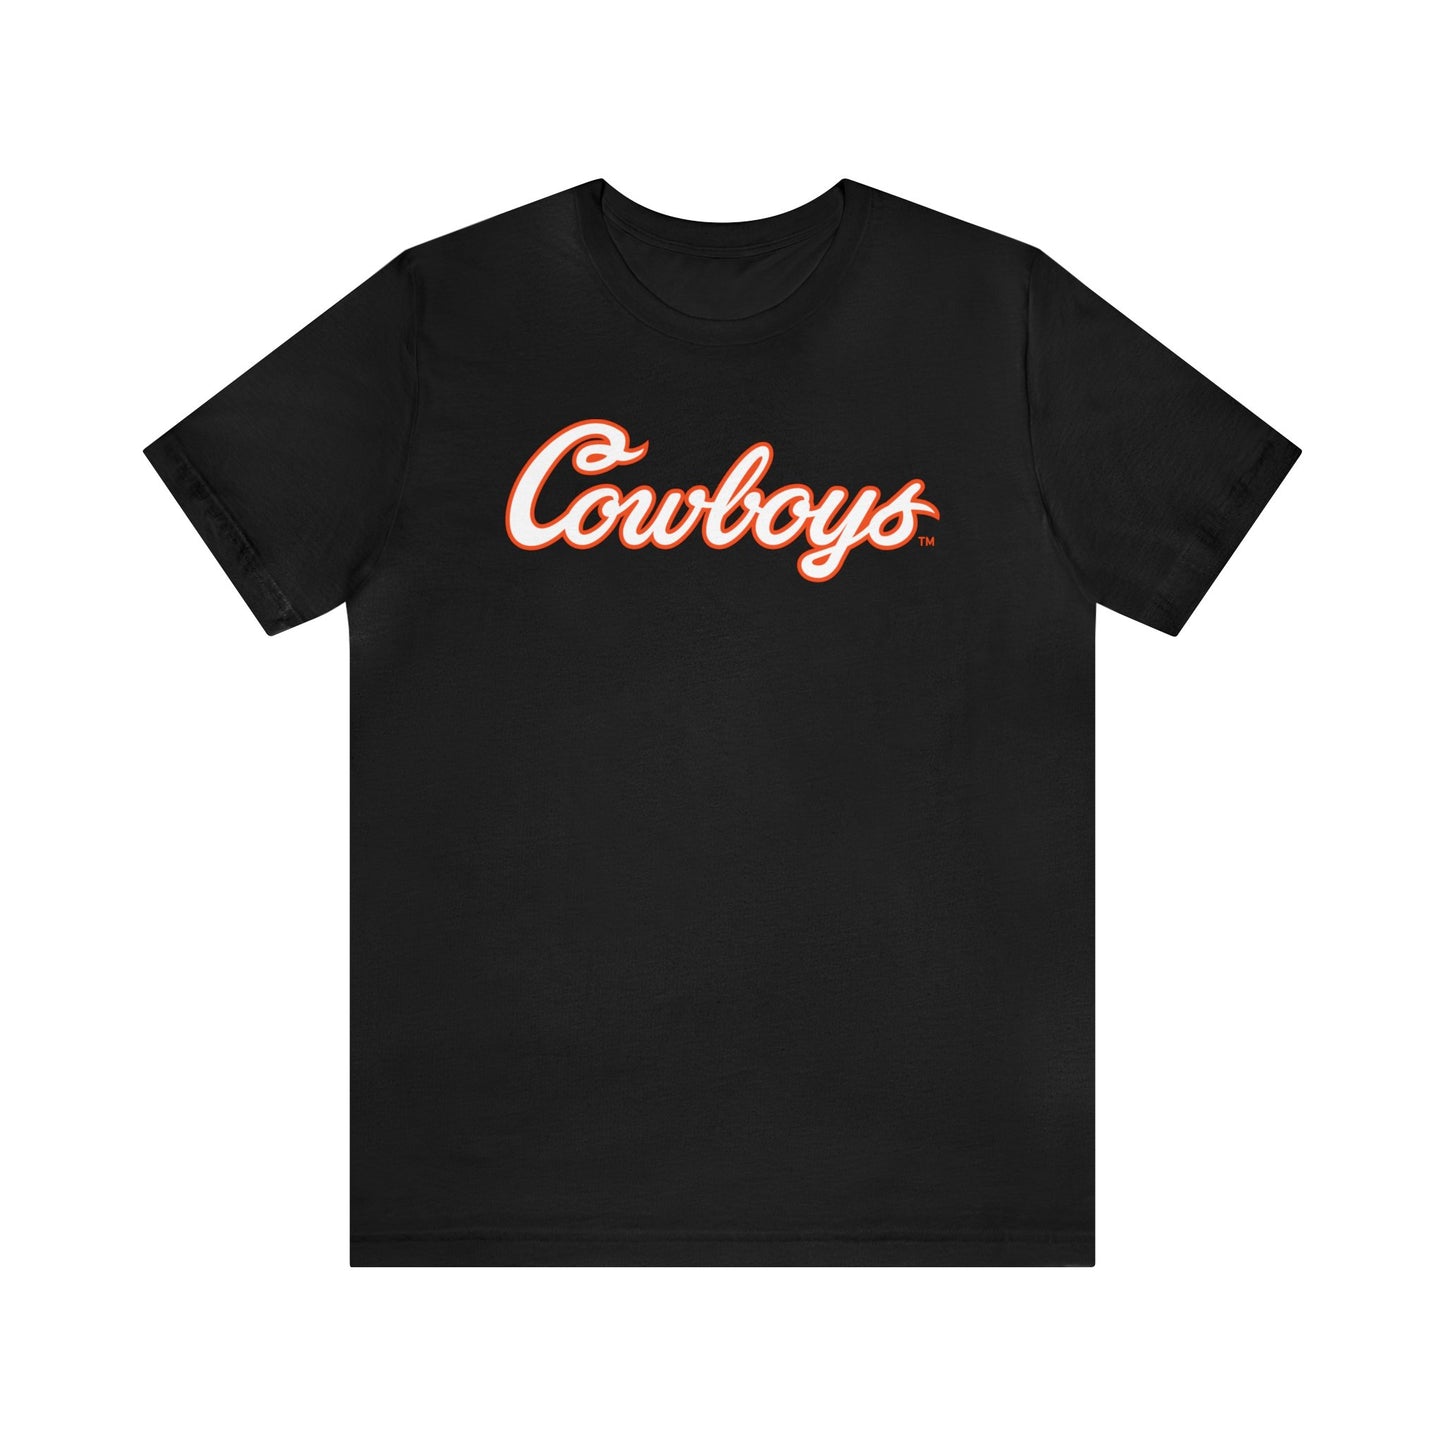 Noah Mckinney #77 Cursive Cowboys T-Shirt